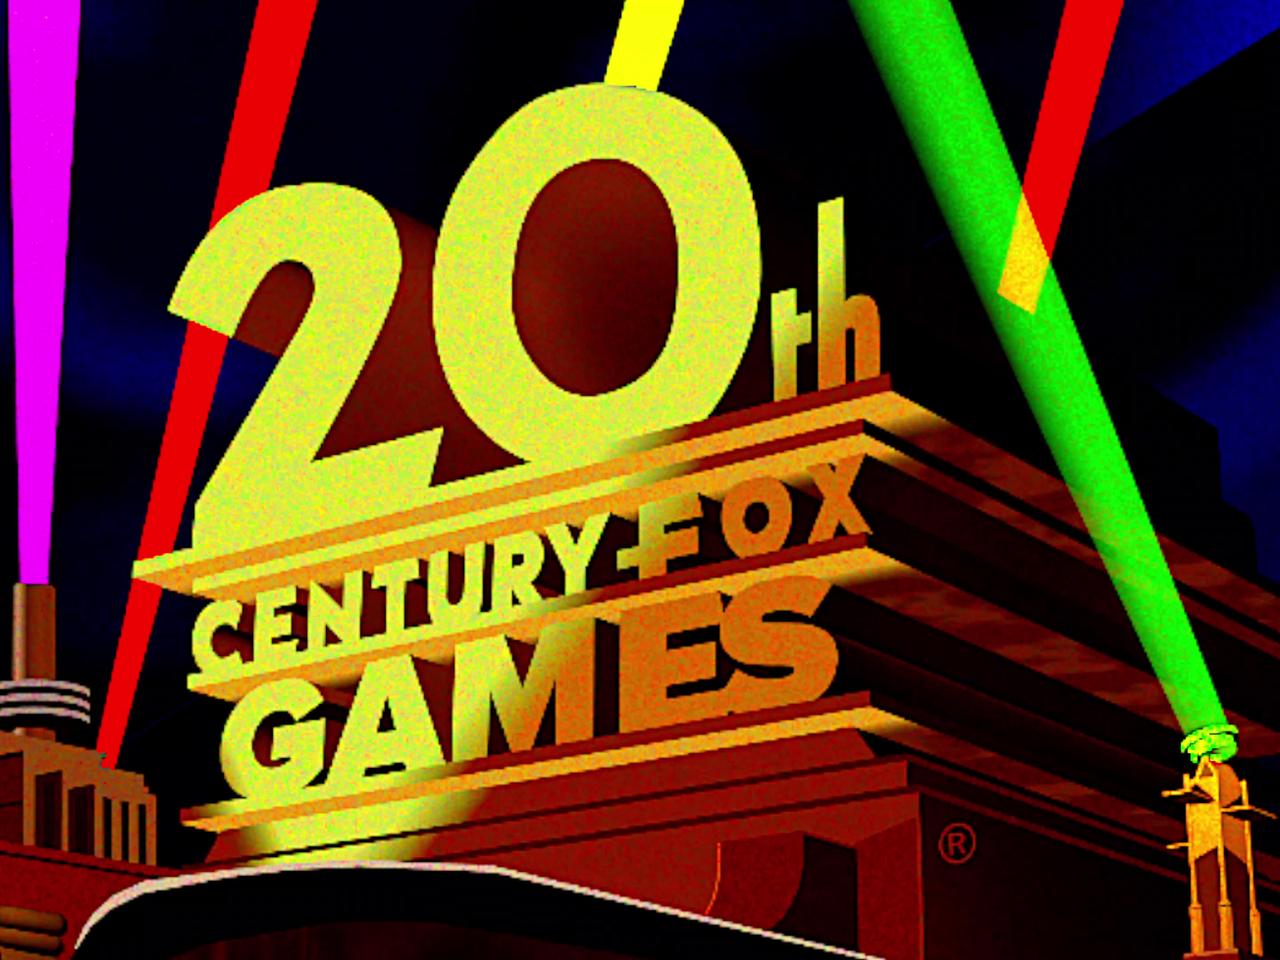 20th Century-Fox Games (1980s - 60FPS)